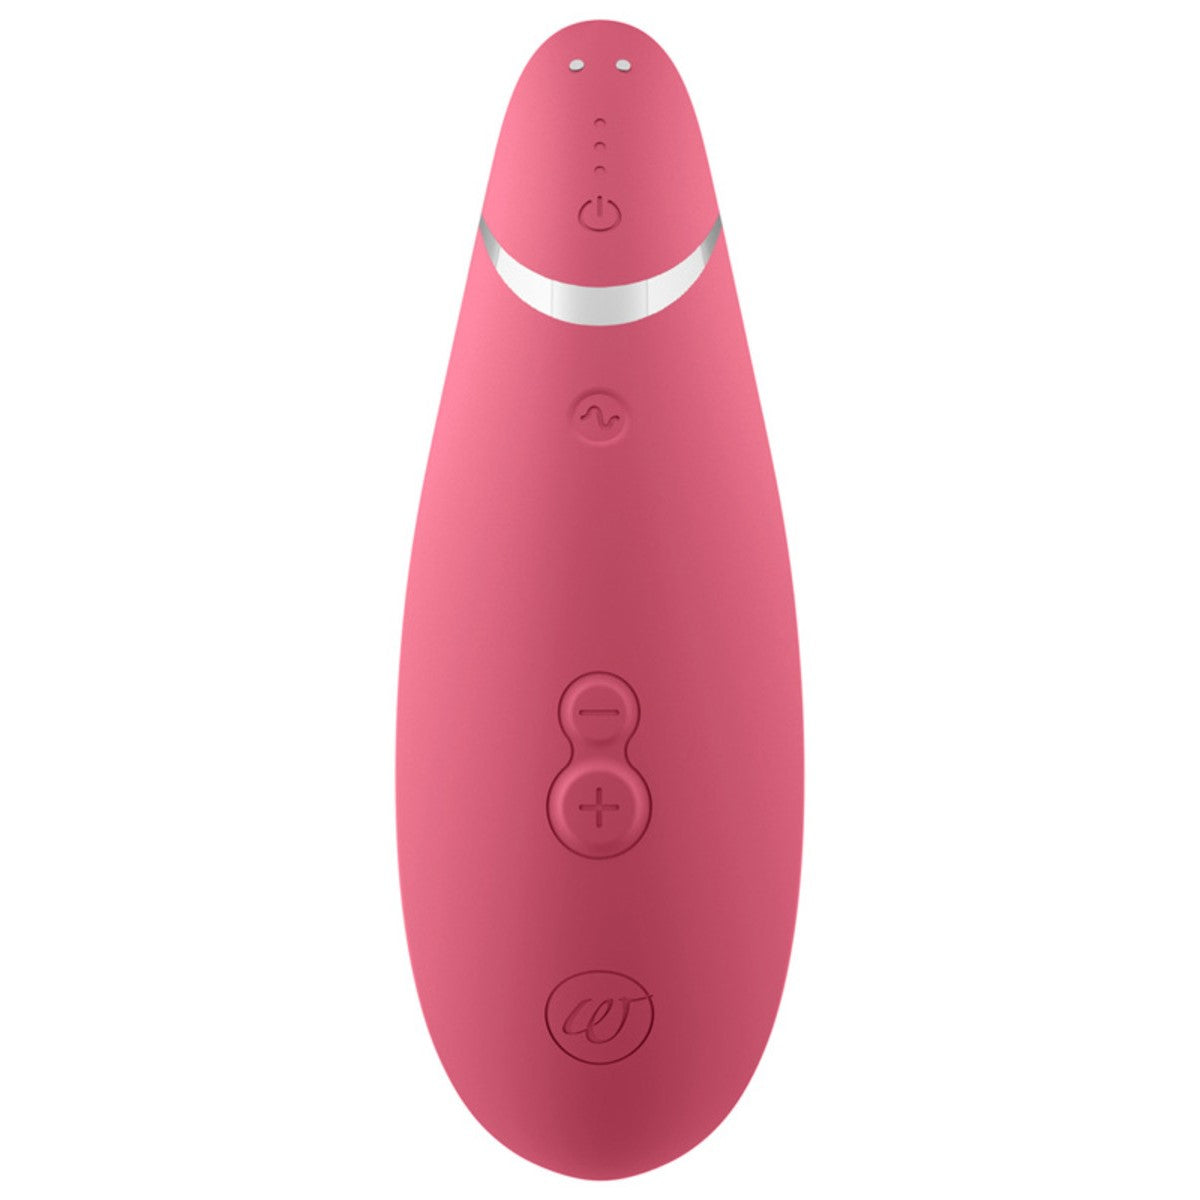 Womanizer Premium 2 Air Pulse Clitoral Vibrator - color_Raspberry - Top View